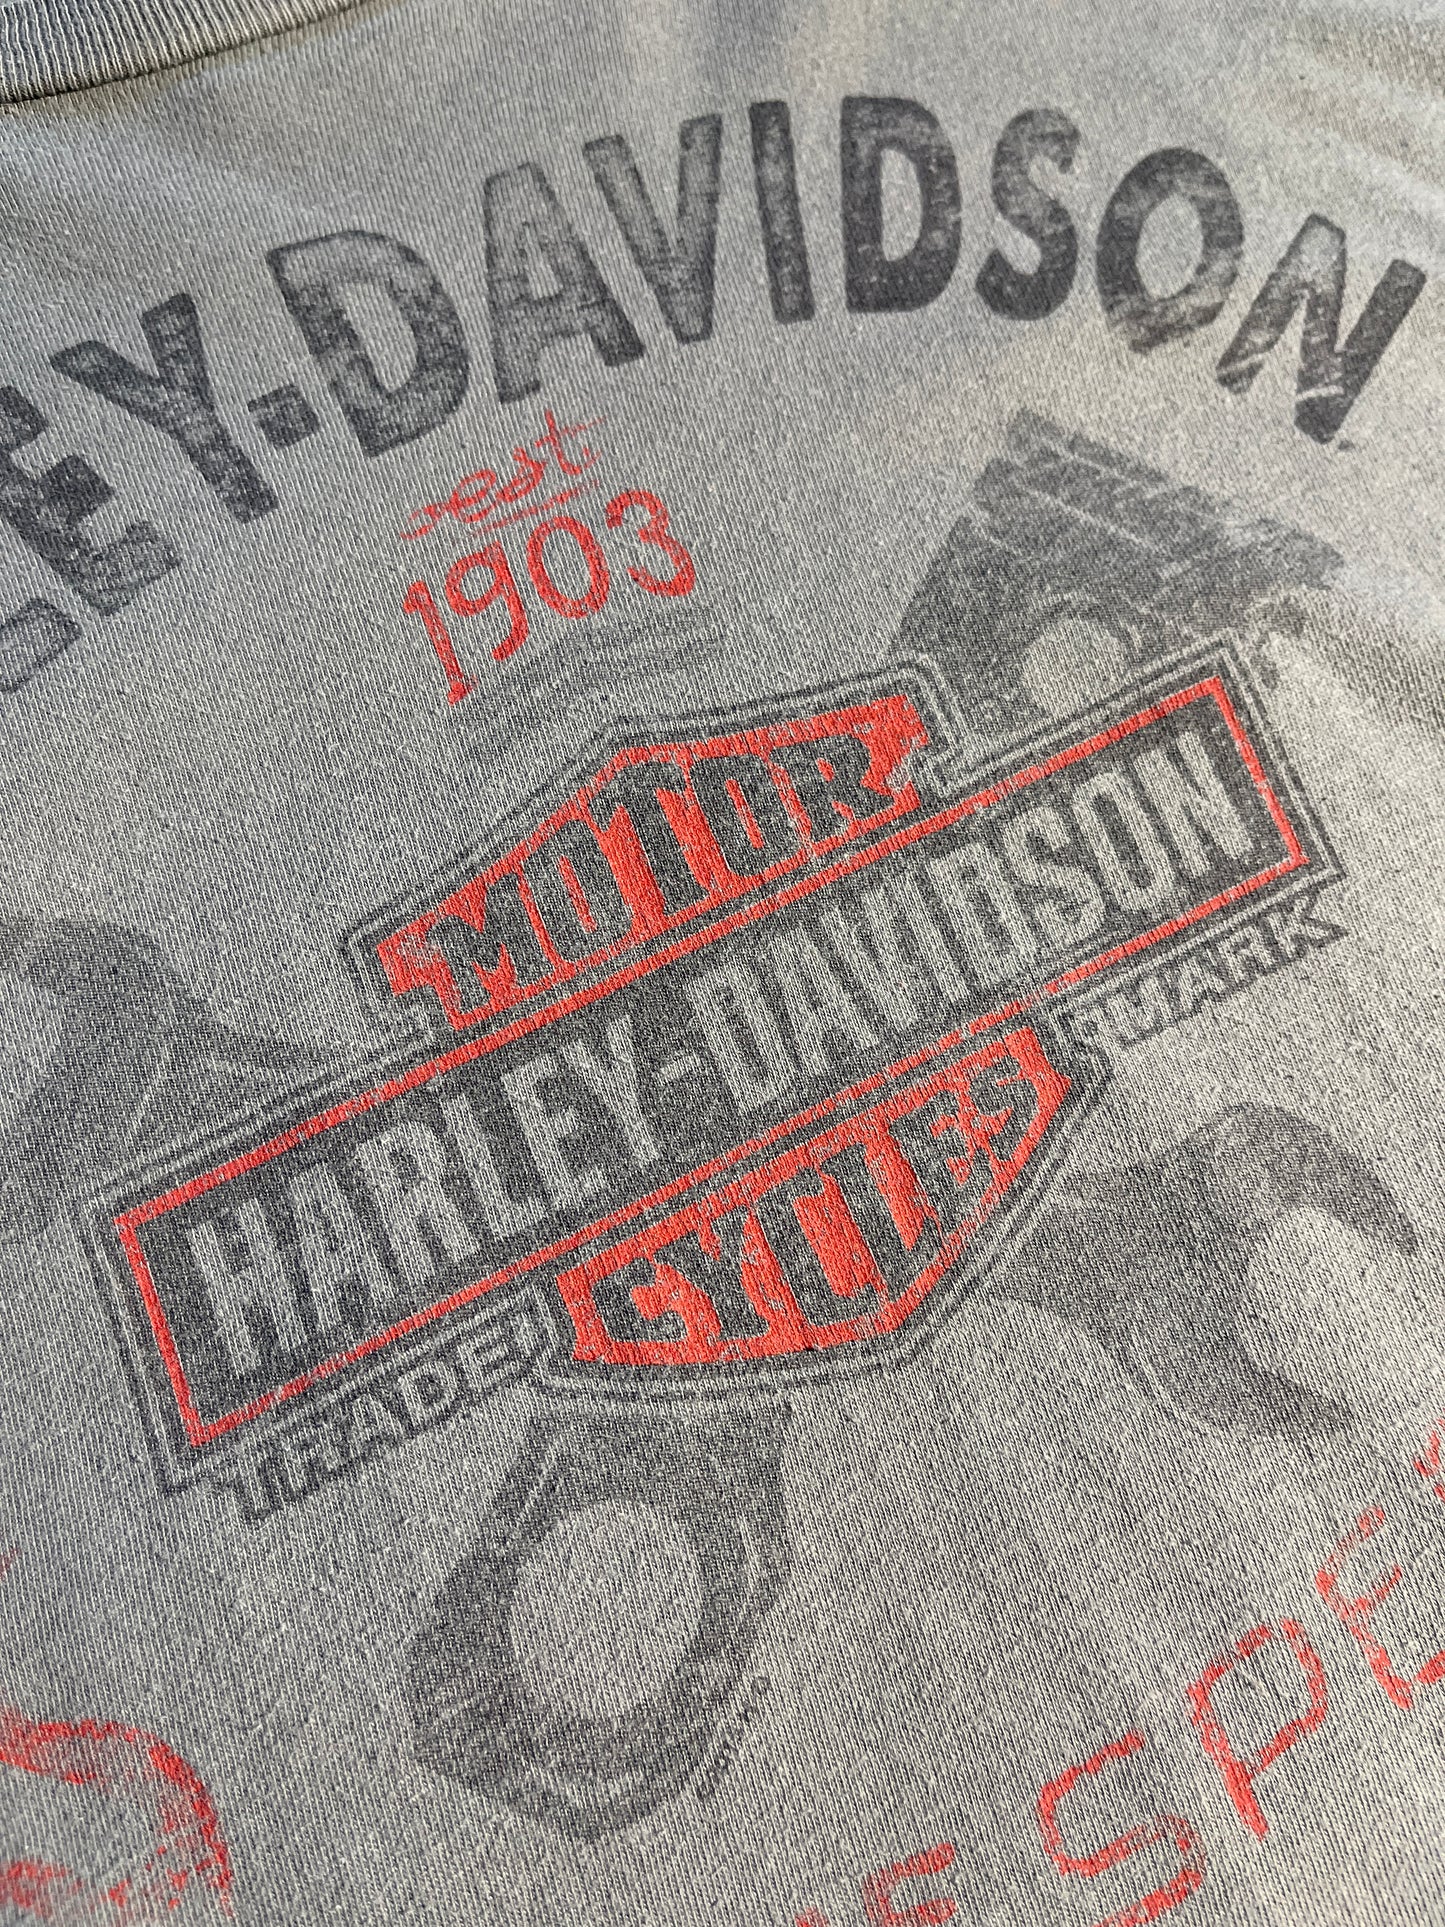 Vintage Harley Davidson Long-Sleeve Shirt Top